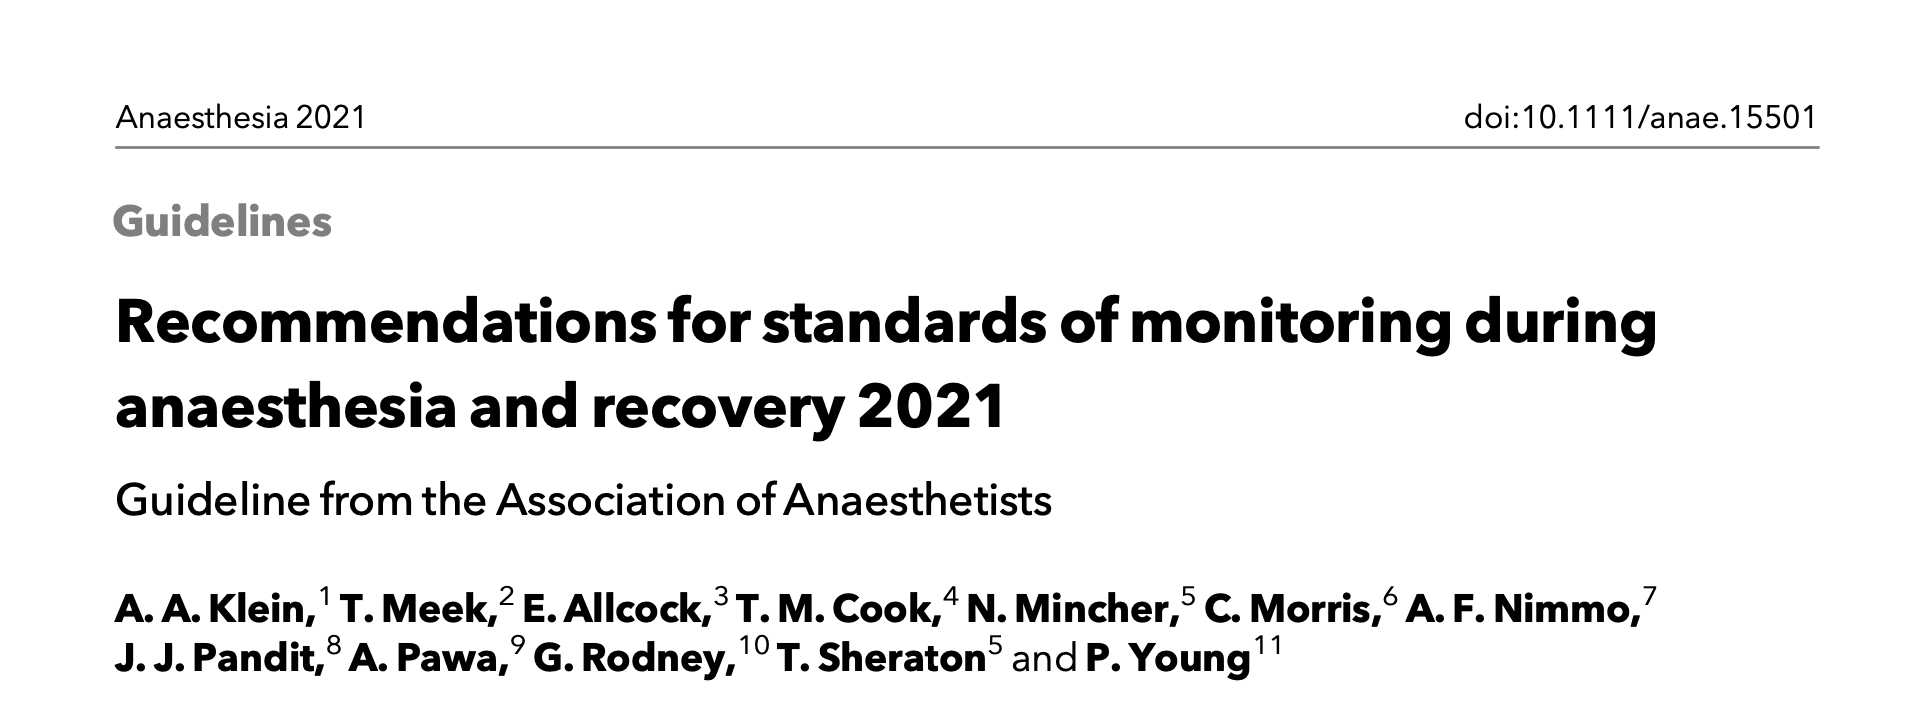 2021 <font color="red">AA</font>指南：麻醉和恢复期间监测标准建议